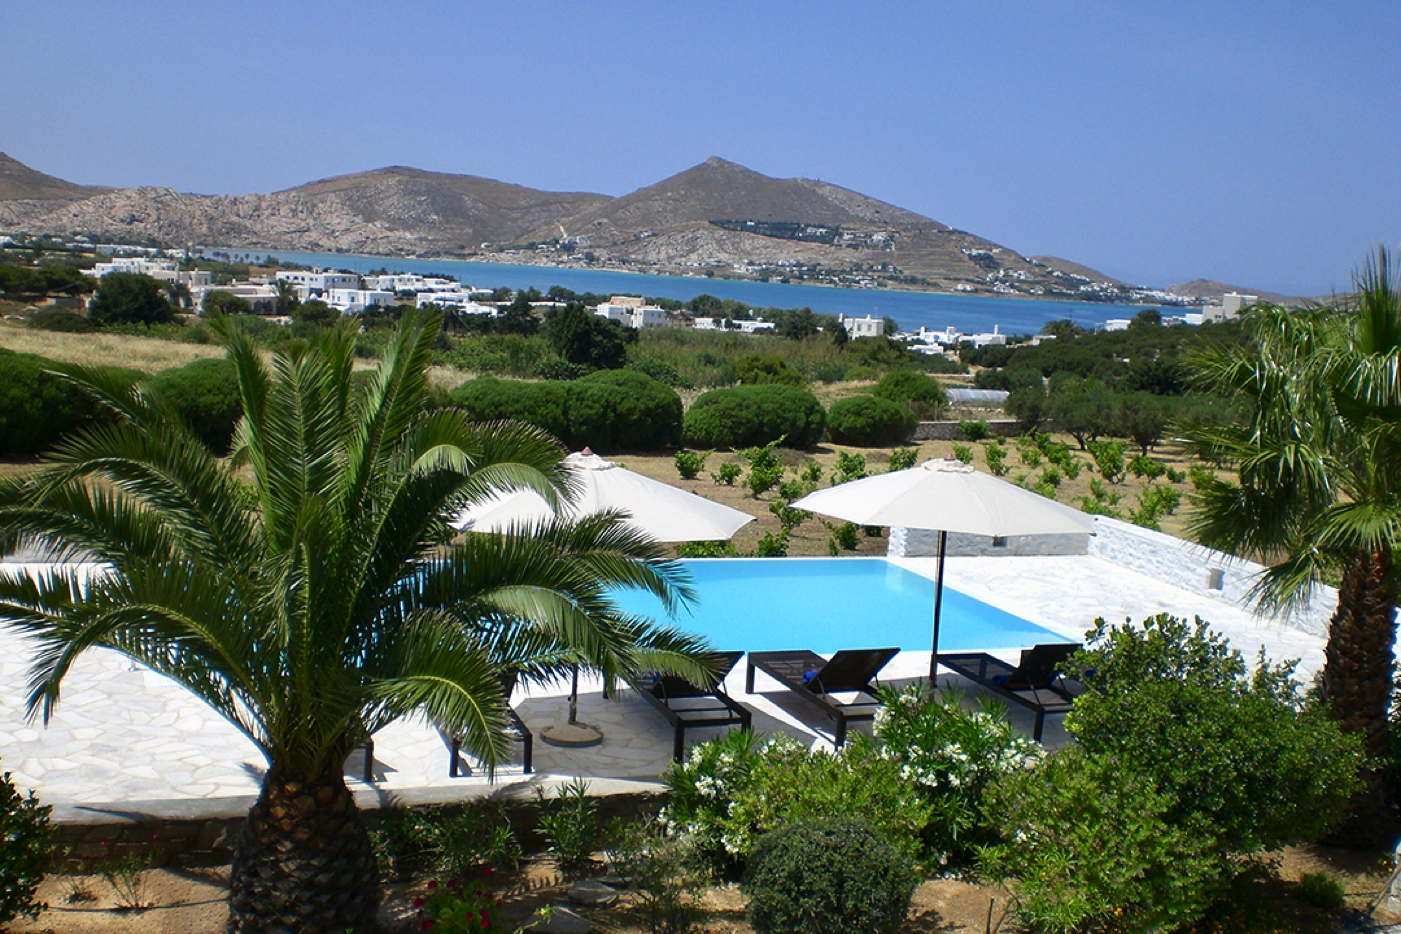 rental villa-holiday rental-vacation villa-infinity pool- in Greece-Cyclades-Paros-Naoussa